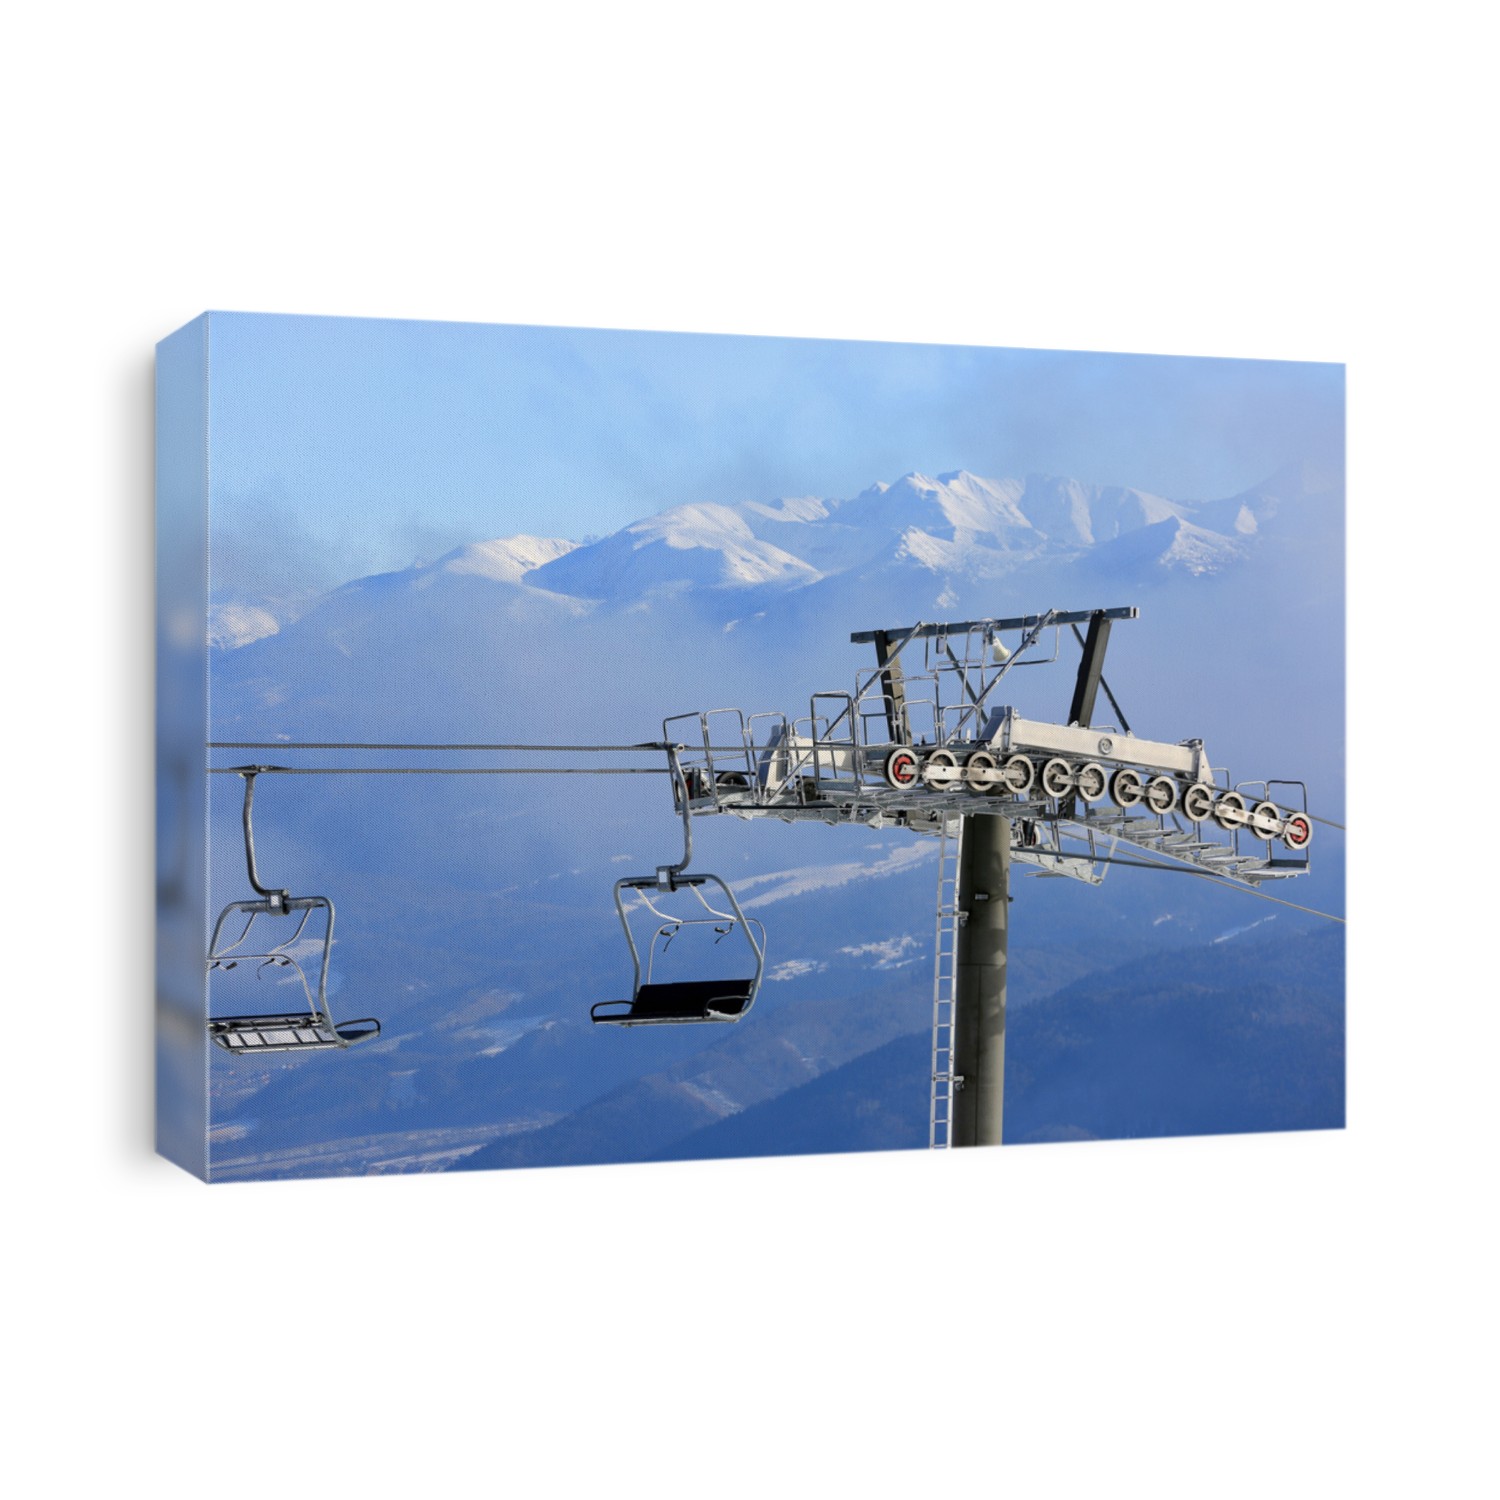 Chairlift on winter ski resort against mountain background